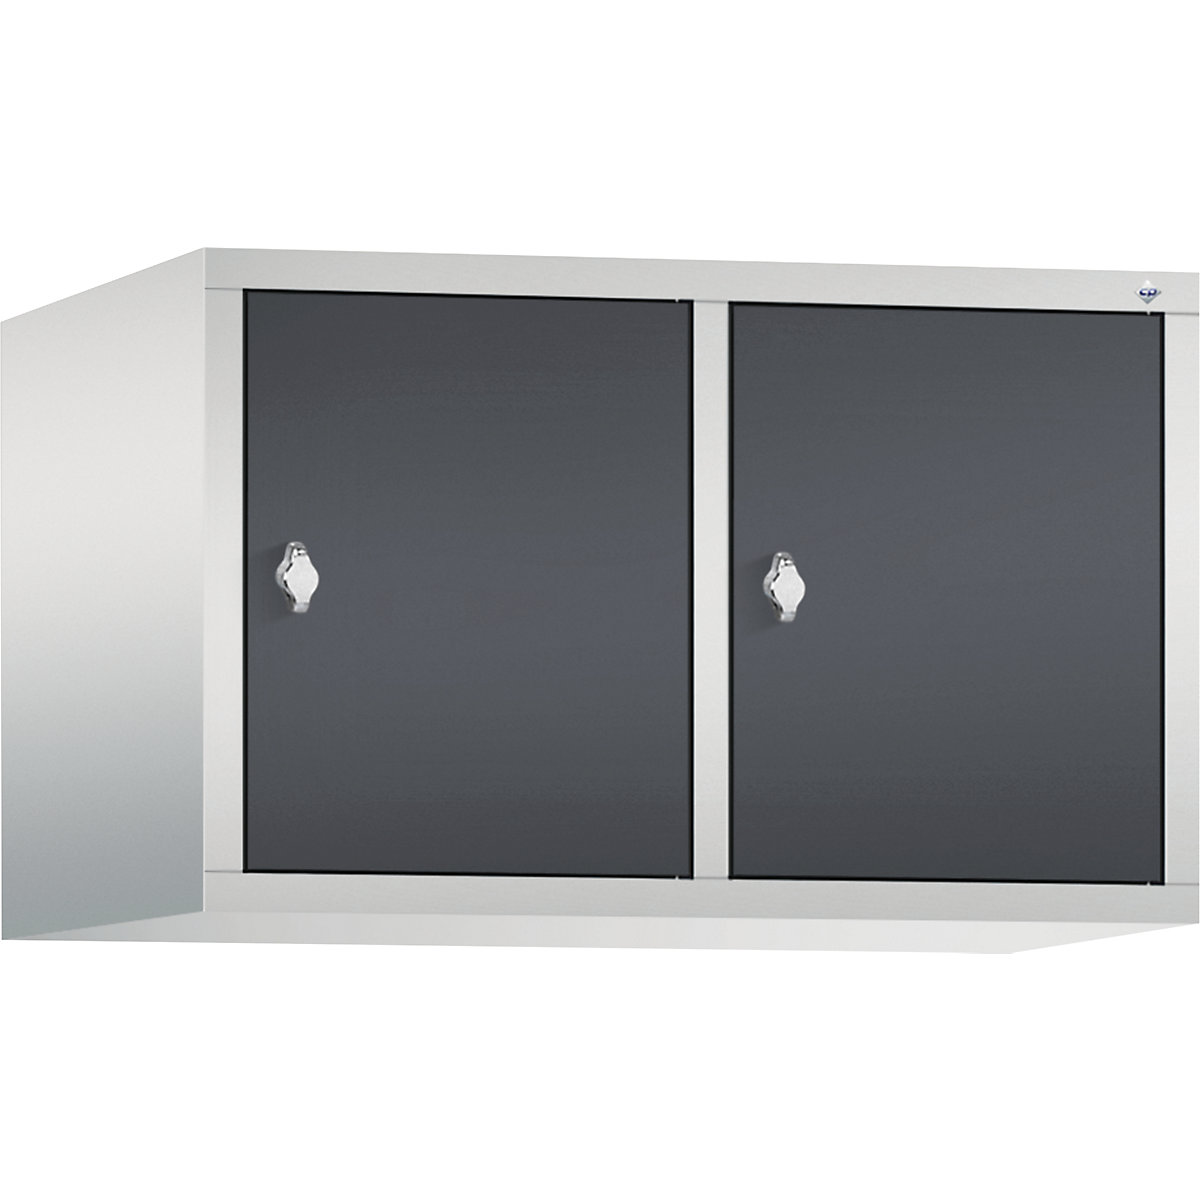 C+P – Altillo CLASSIC, 2 compartimentos, anchura de compartimento 400 mm, gris luminoso / gris negruzco